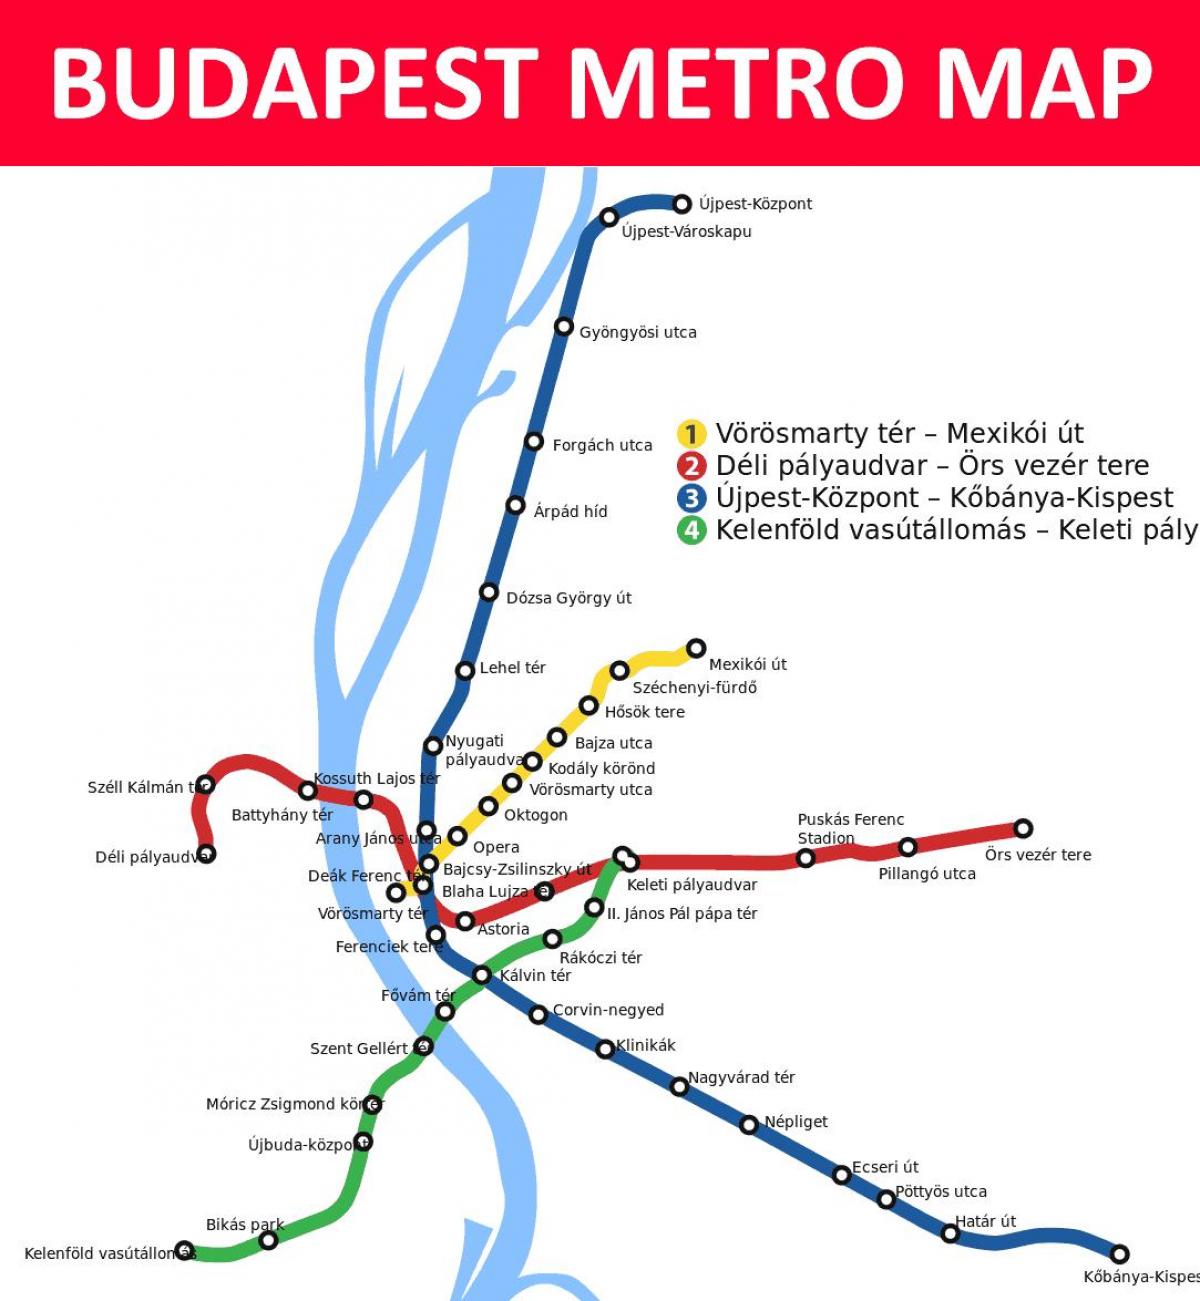 zemljevid budapest keleti